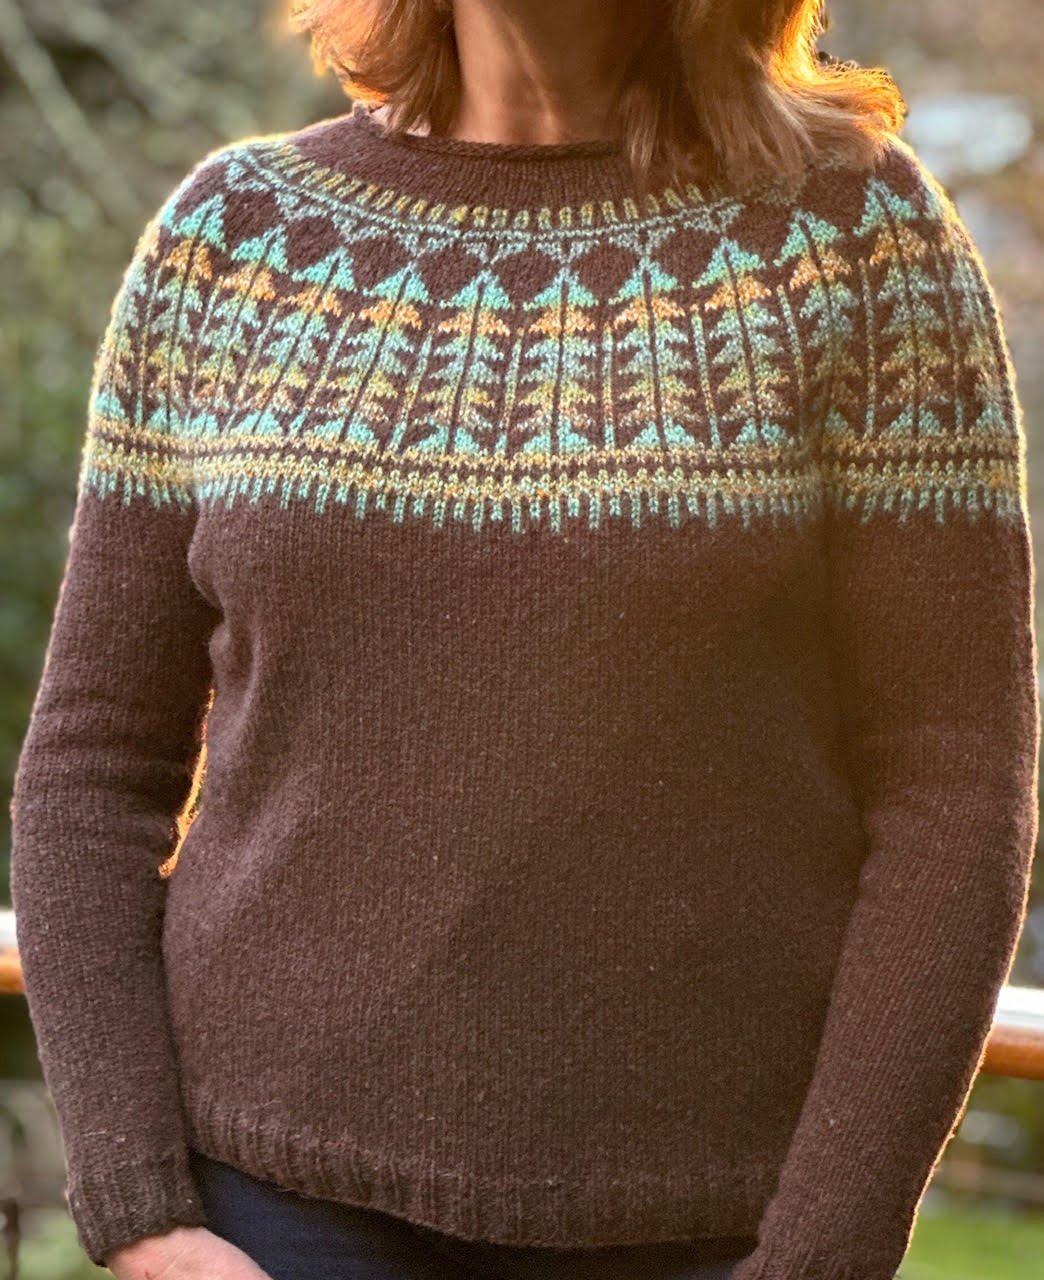 Colorwork Sweater Class